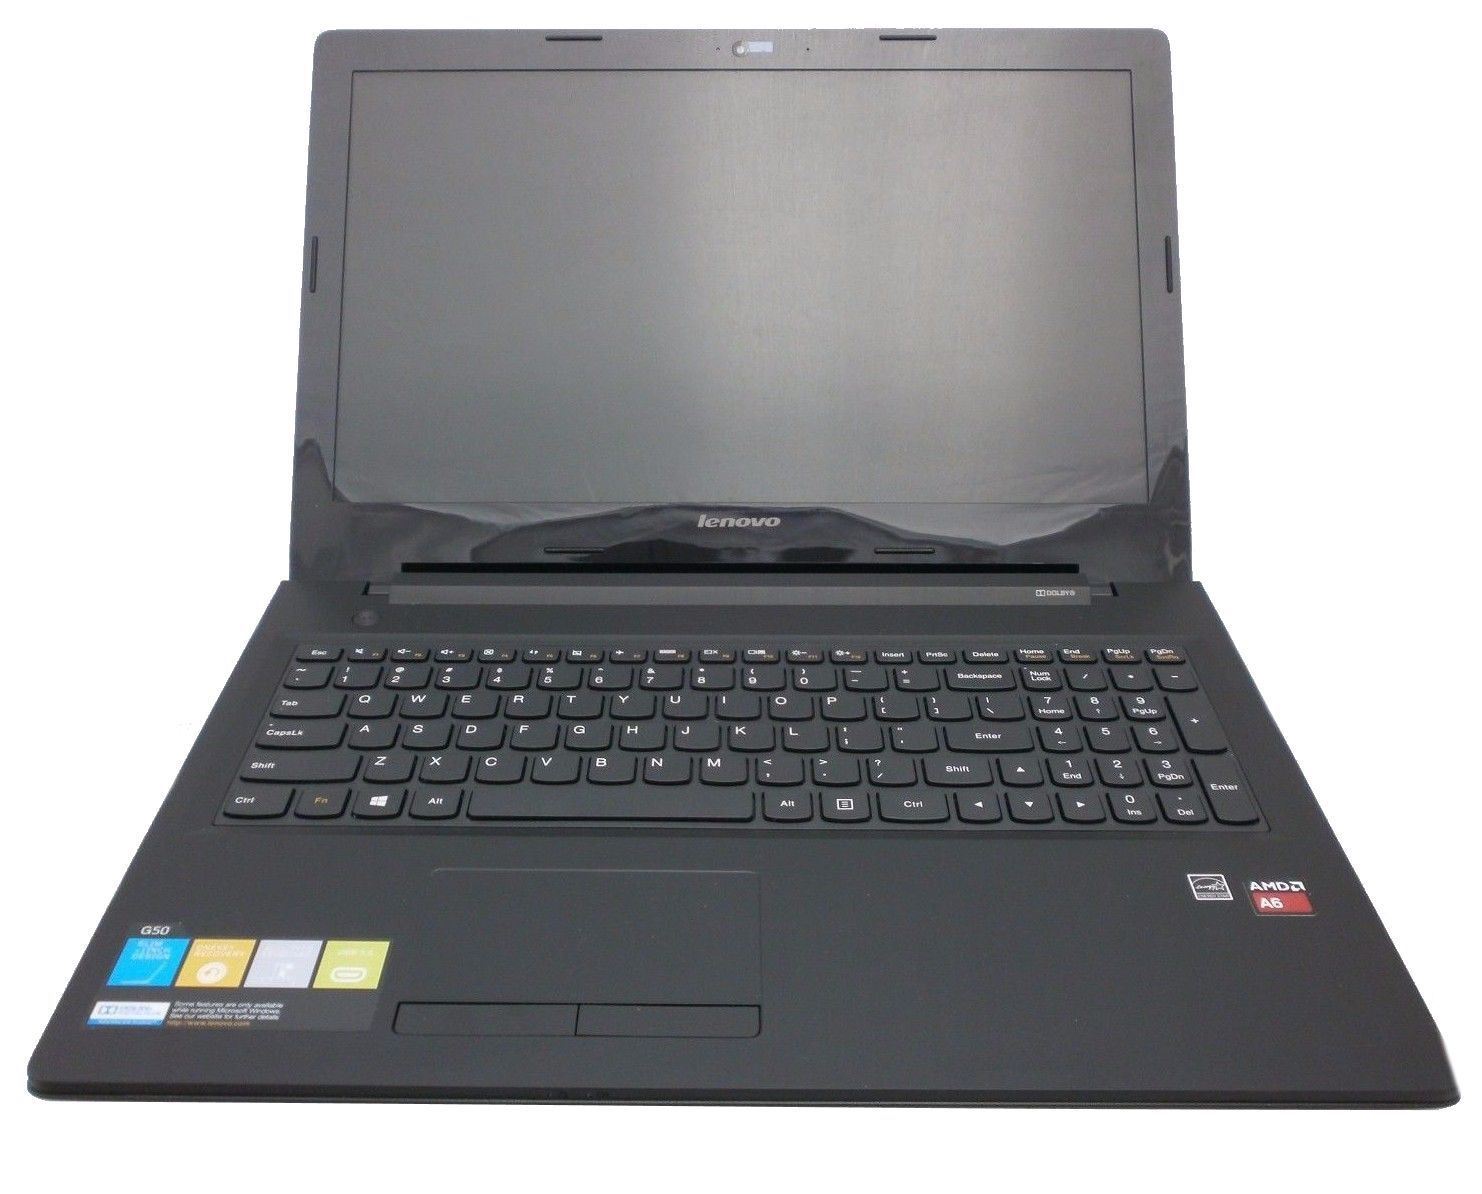 Lenovo G50 Laptop Amd A6 80ghz 4gb Ram 1tb